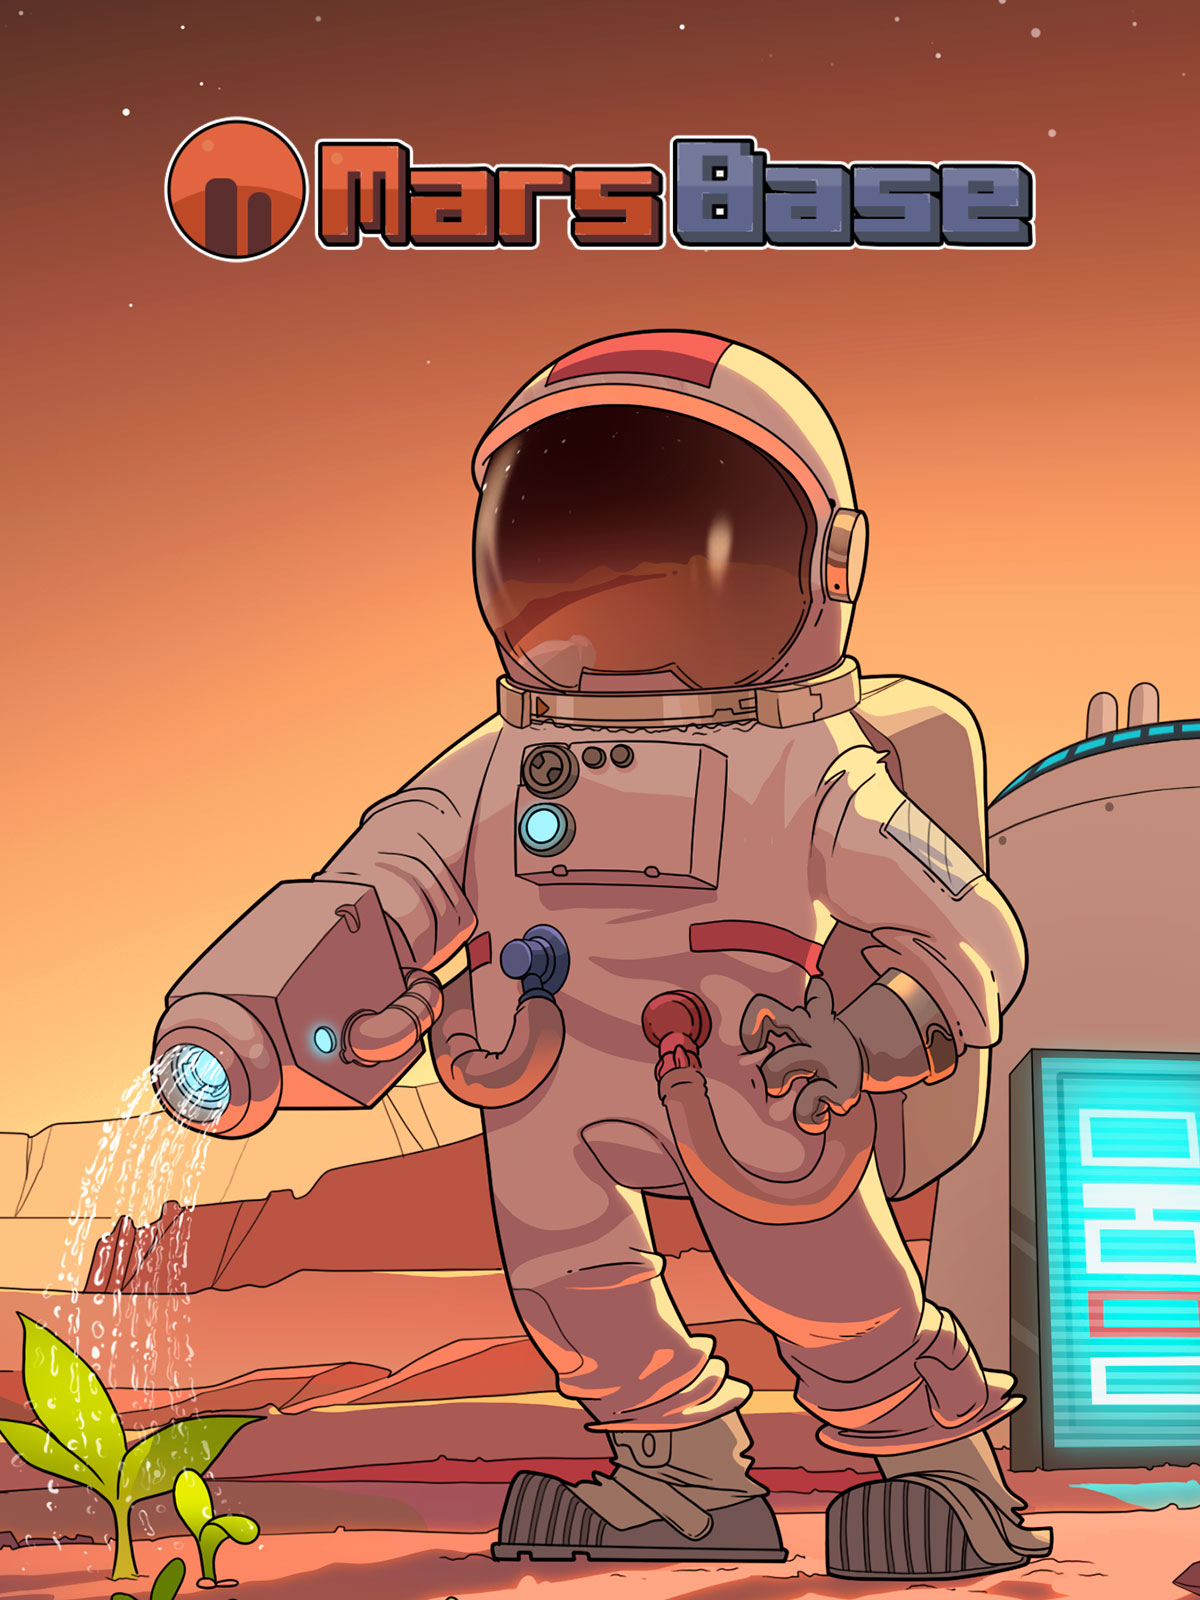 Mars Base [PC, Цифровая версия] (Цифровая версия) цена и фото